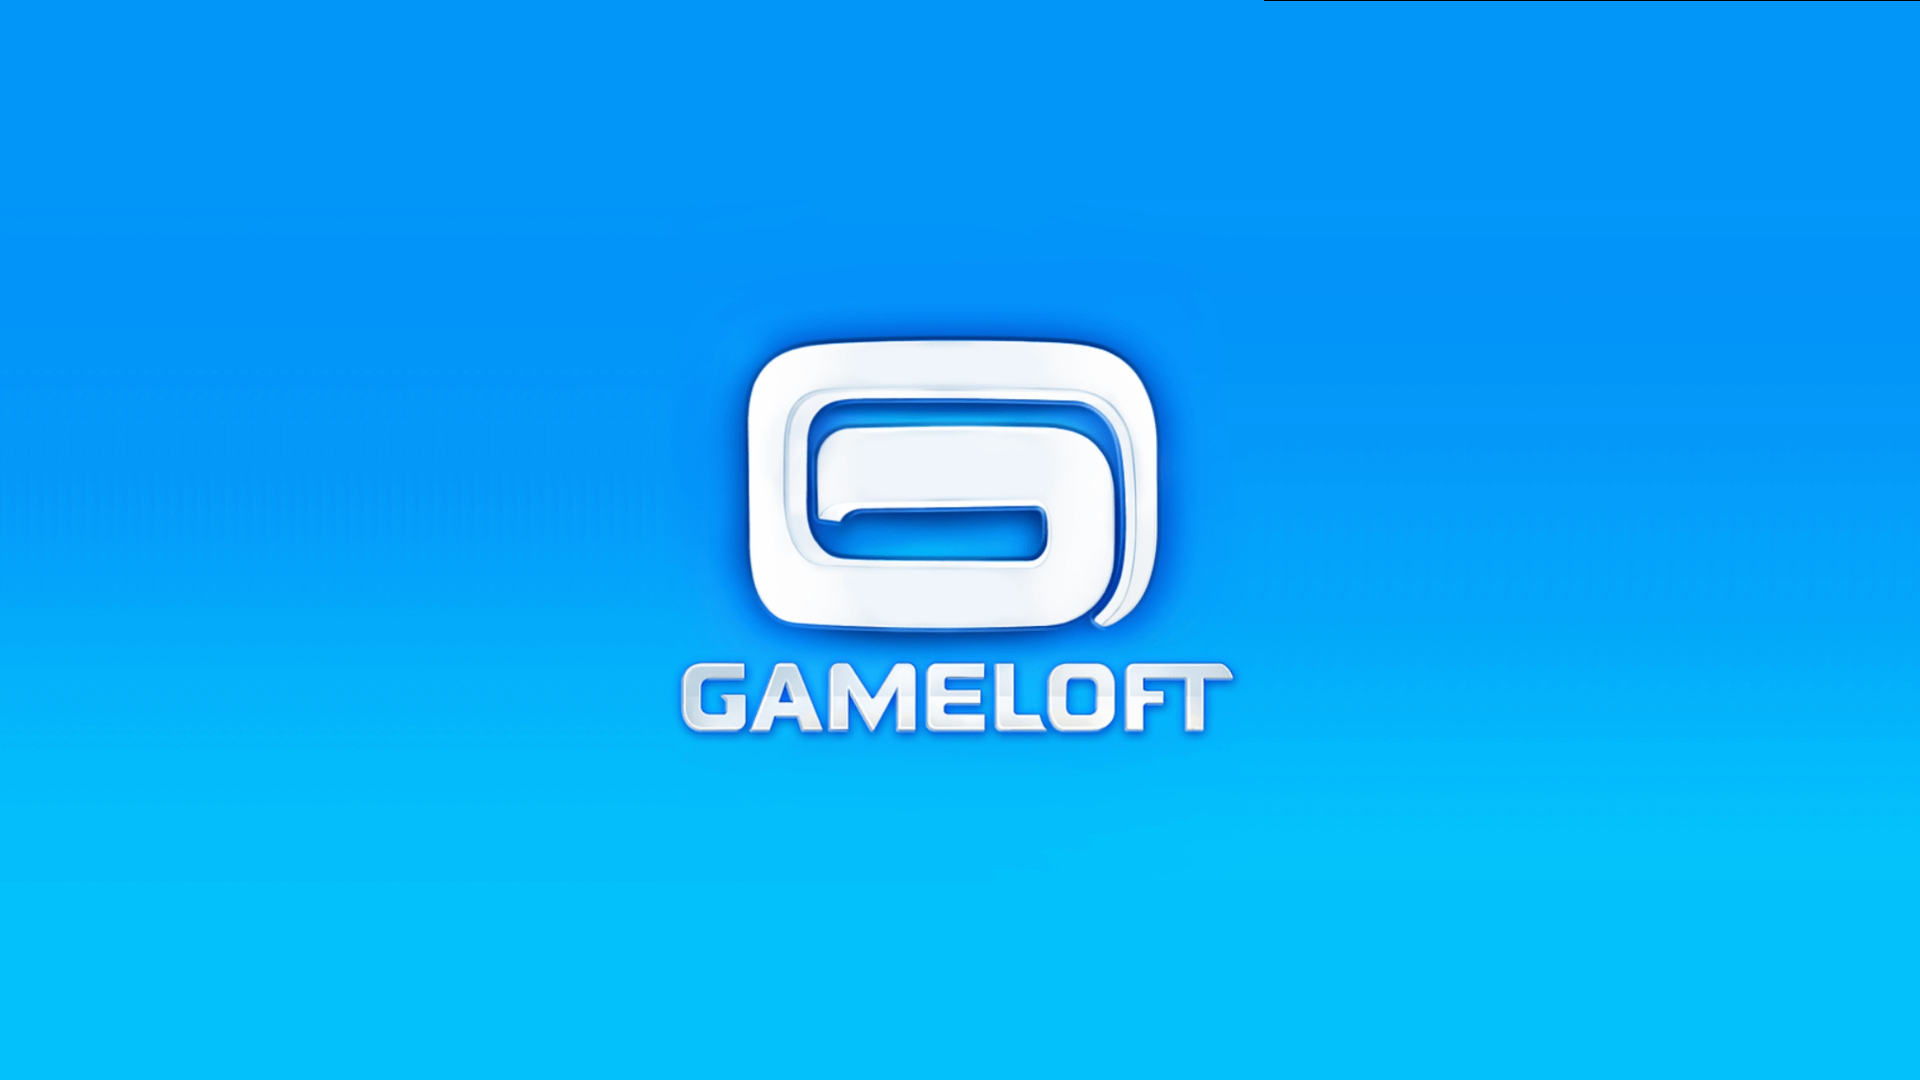 Gameloft 在巴黎開設新工作室 專注打造新遊戲